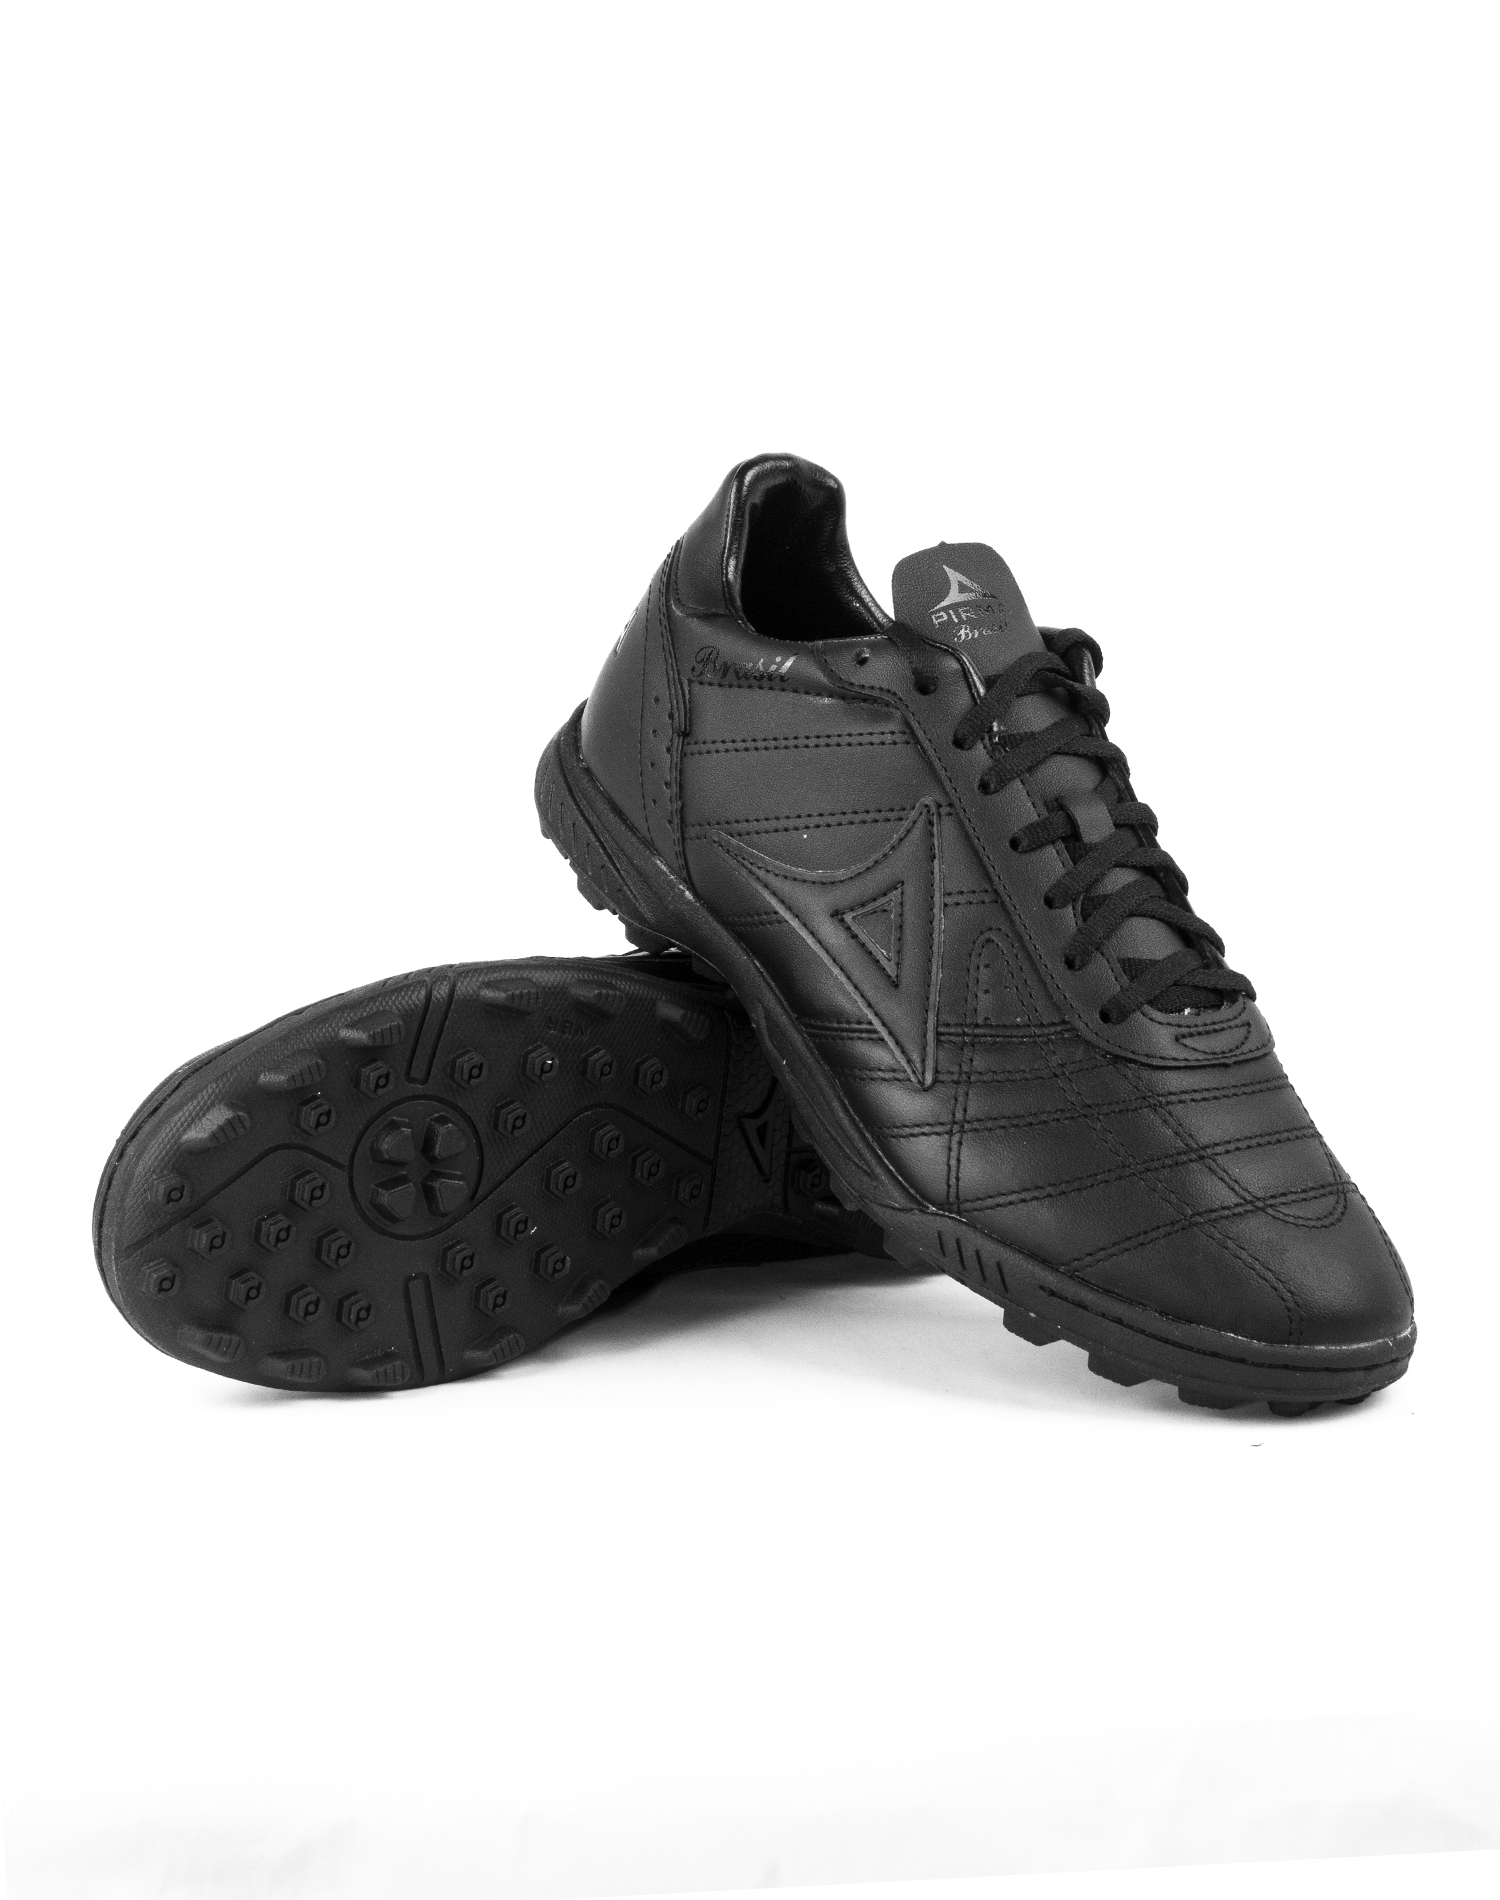 Zapatos Futbol Pirma Brasil 503 Negro - Golero Sport